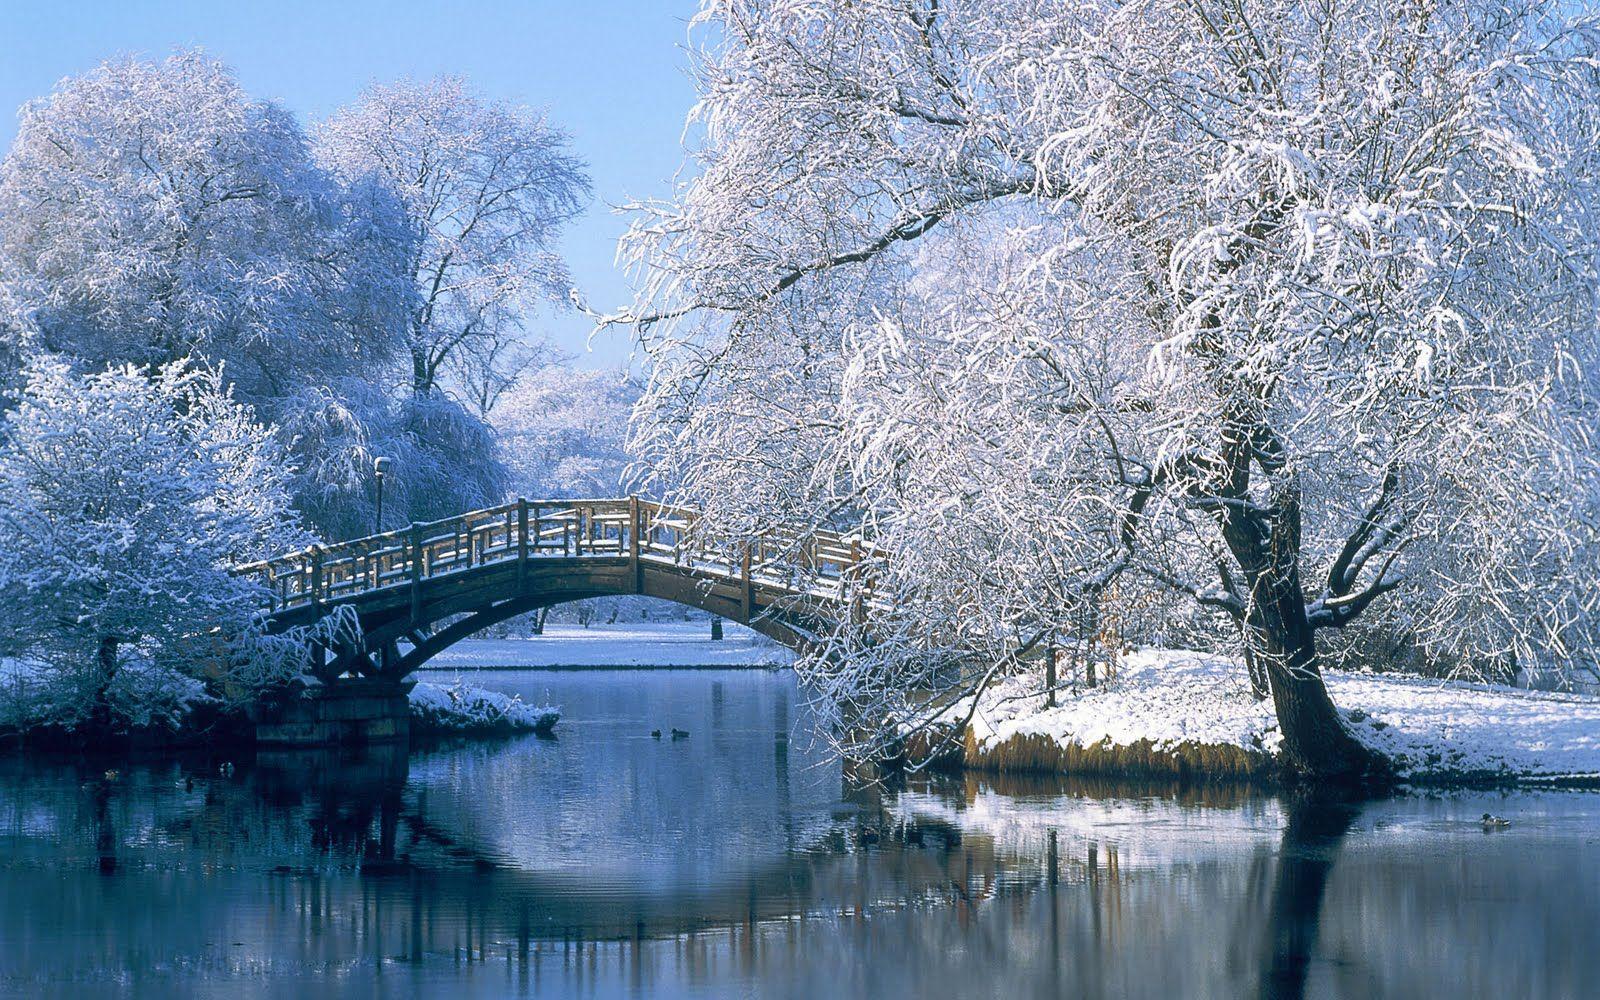 Brug in de winter. Winter scenery, Winter landscape, Winter picture